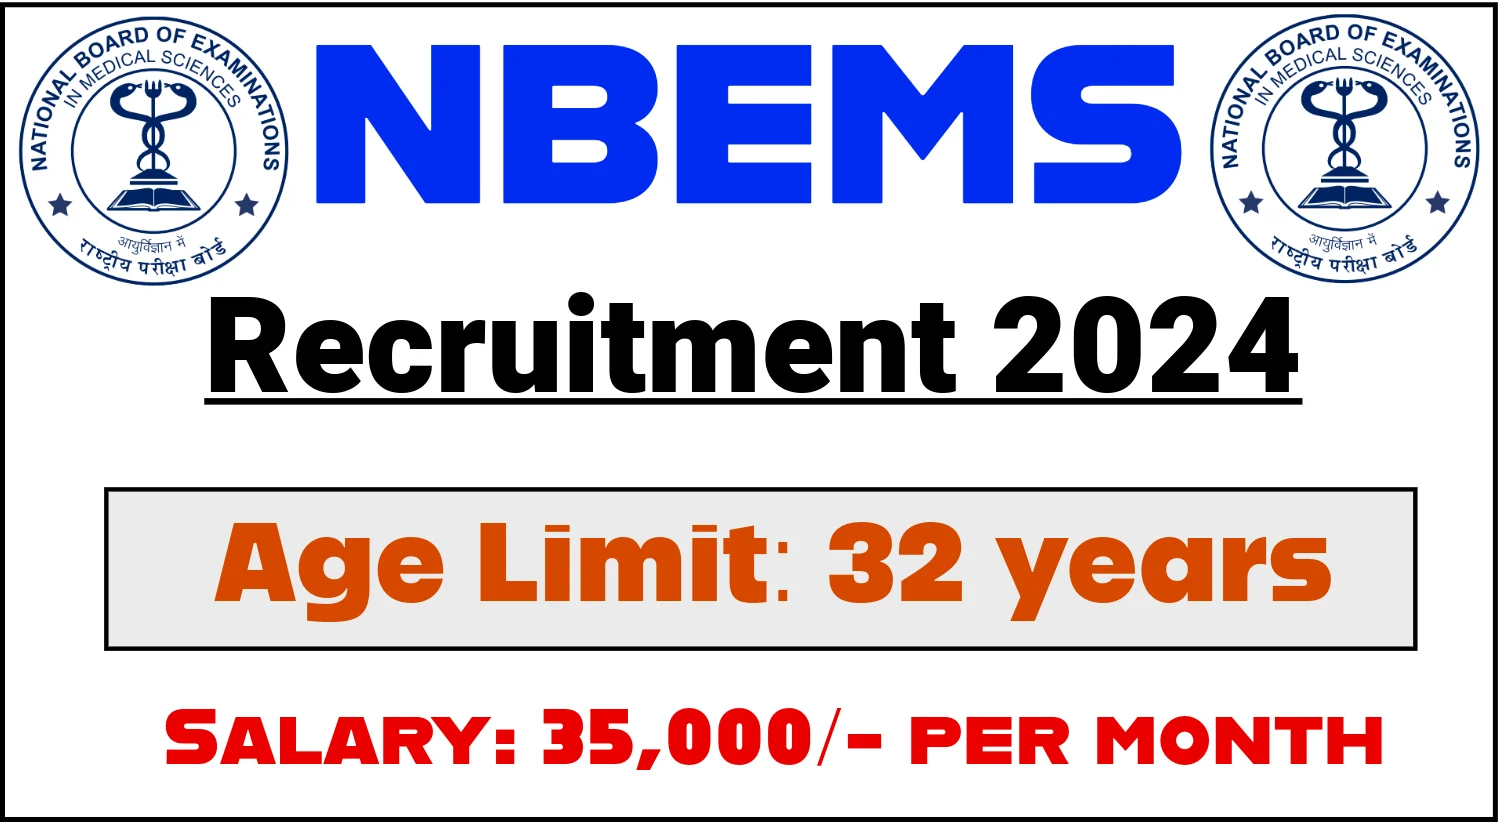 NBEMS Recruitment 2024